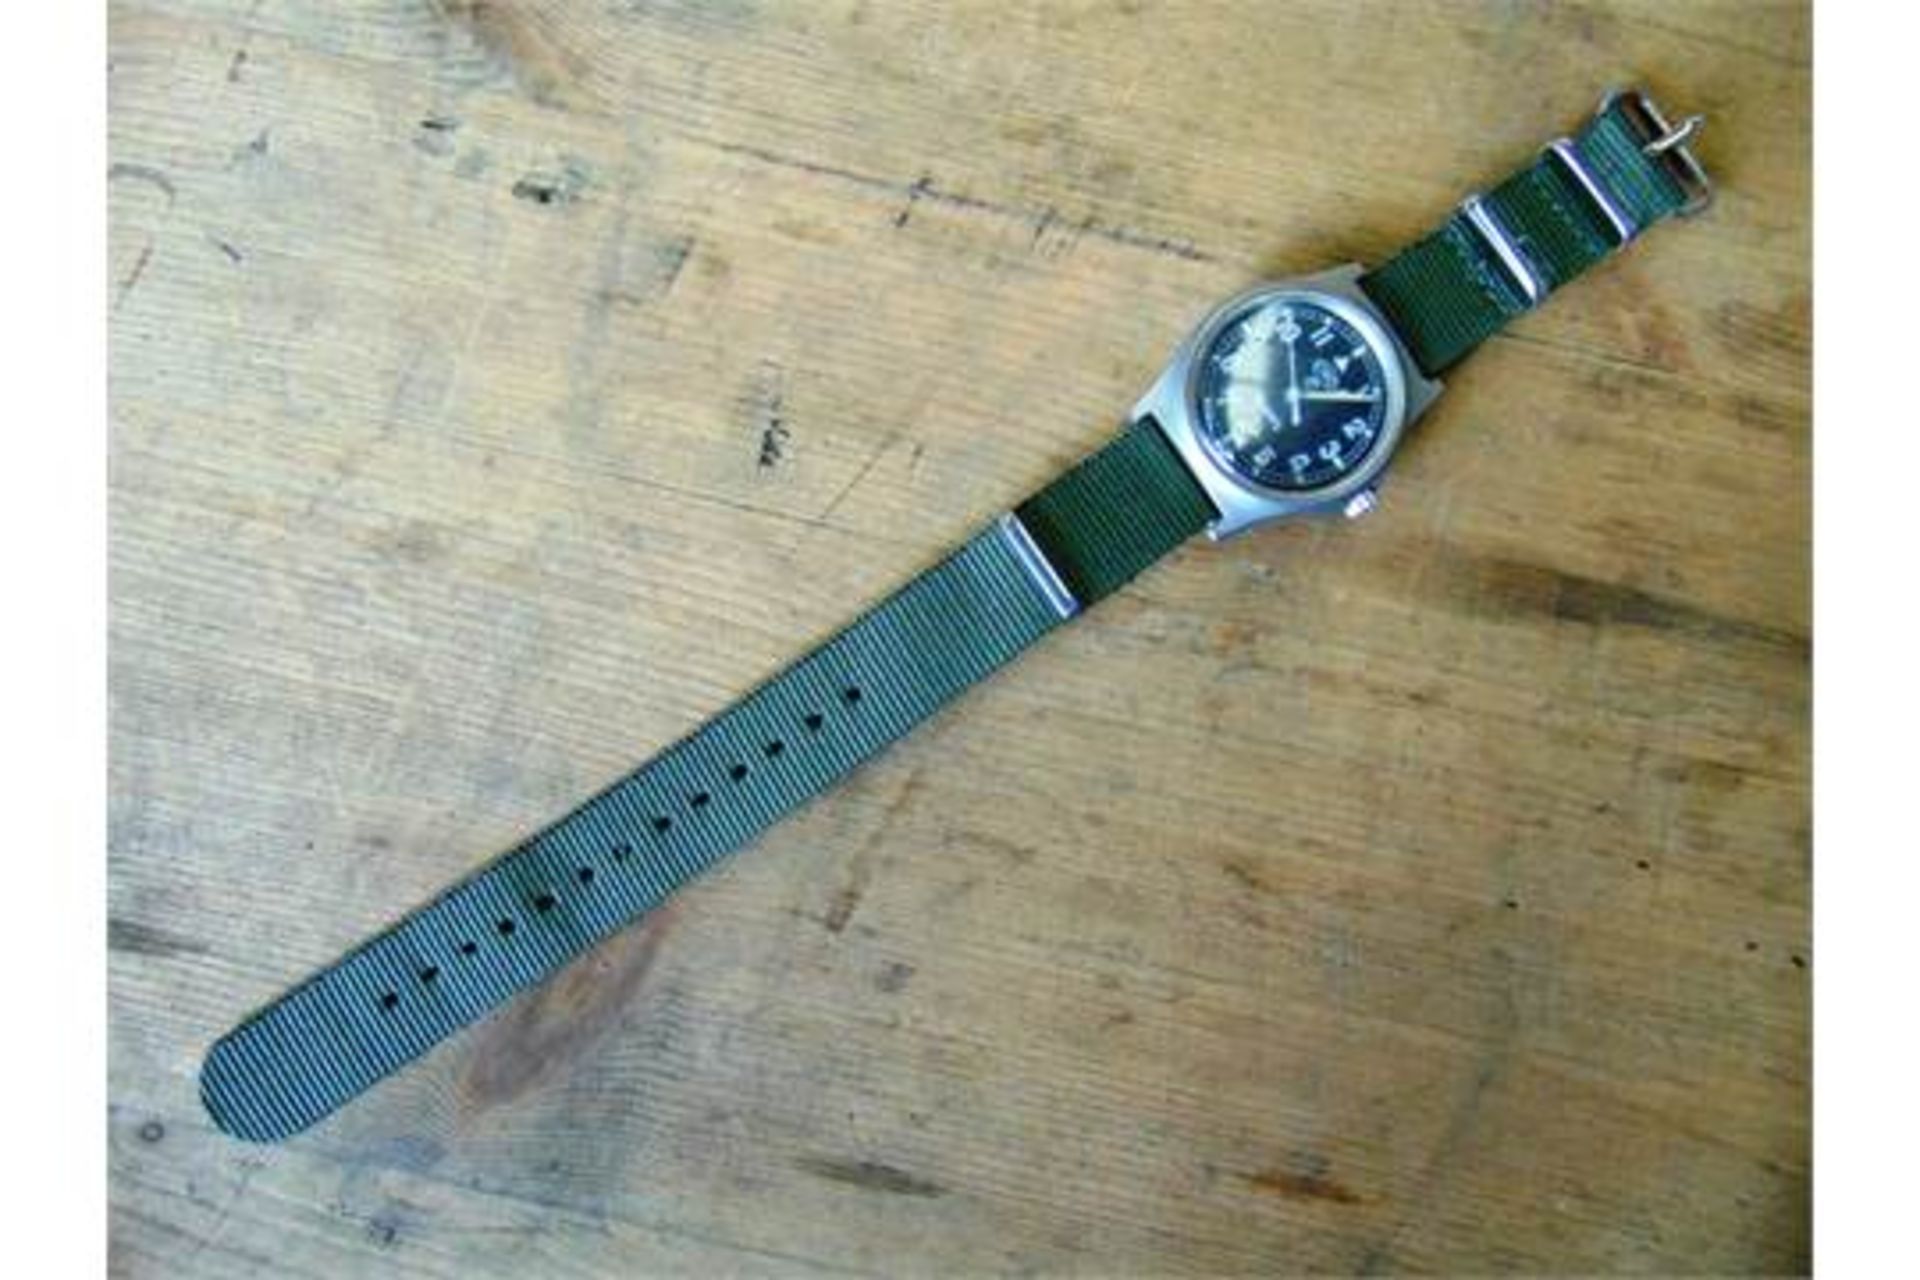 Genuine British Army, CWC Quartz Wrist Watch - Image 3 of 6